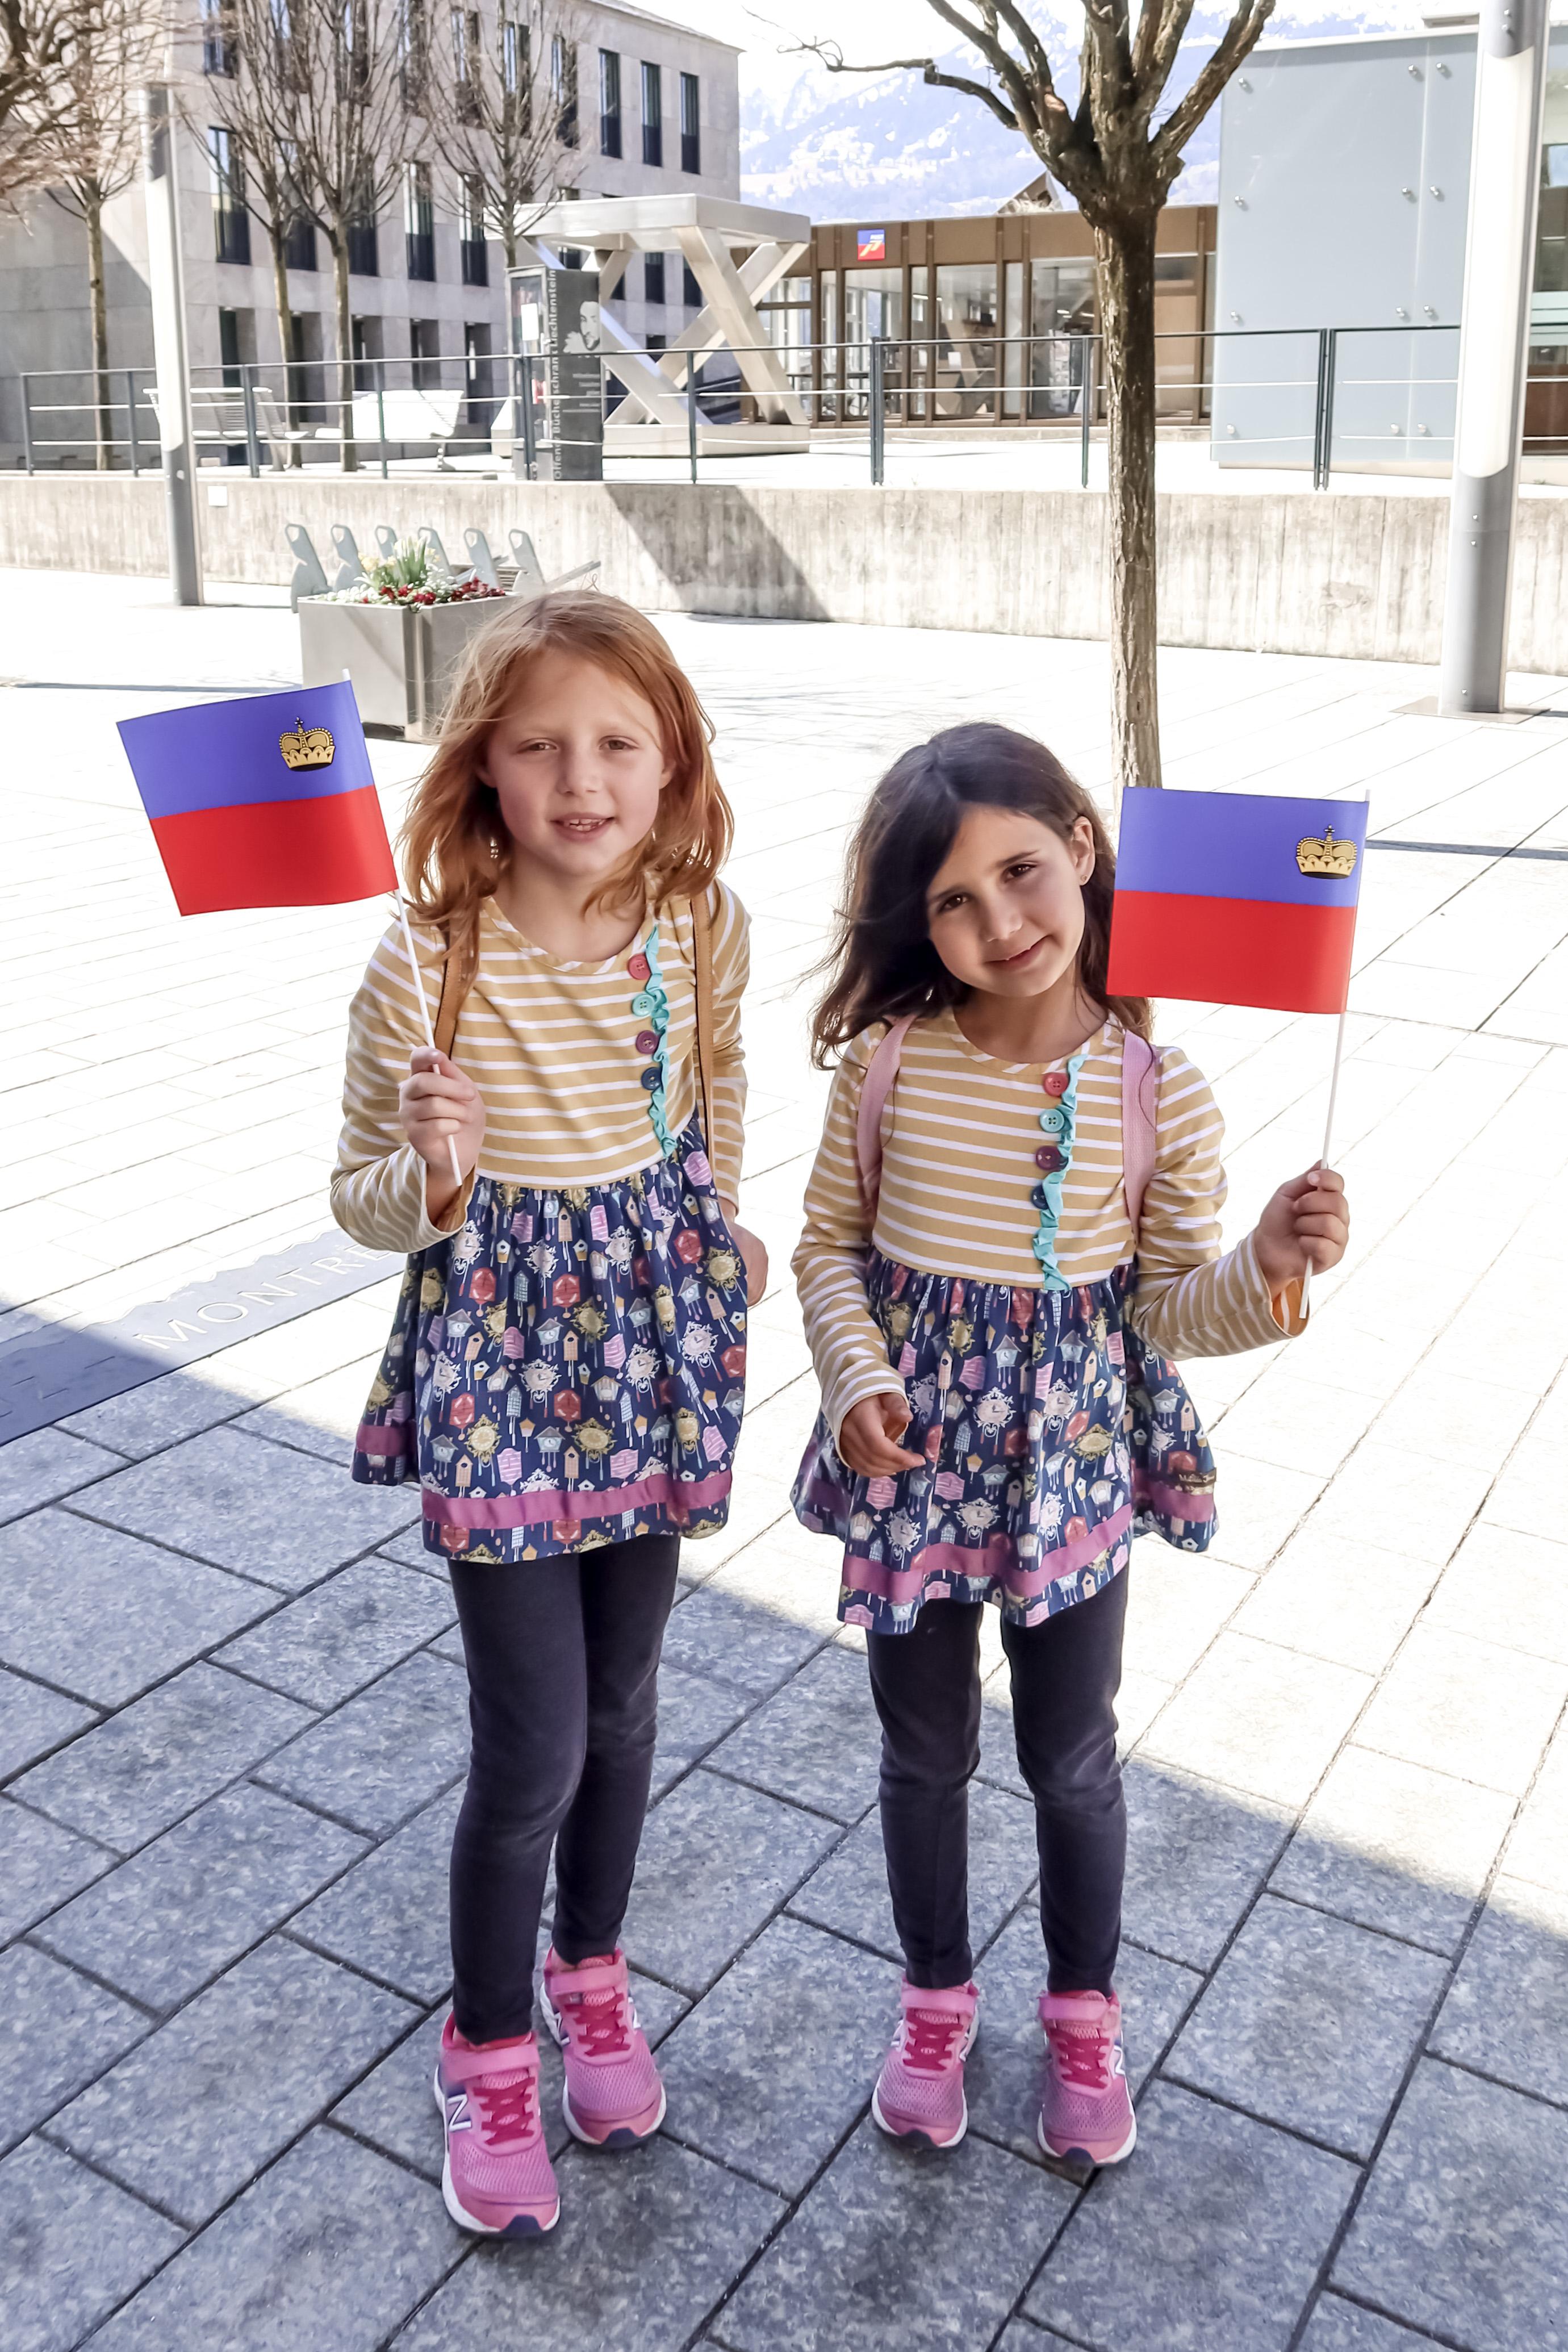 Passport Stamp and flags at the Tourist Office - Liechtenstein with Kids